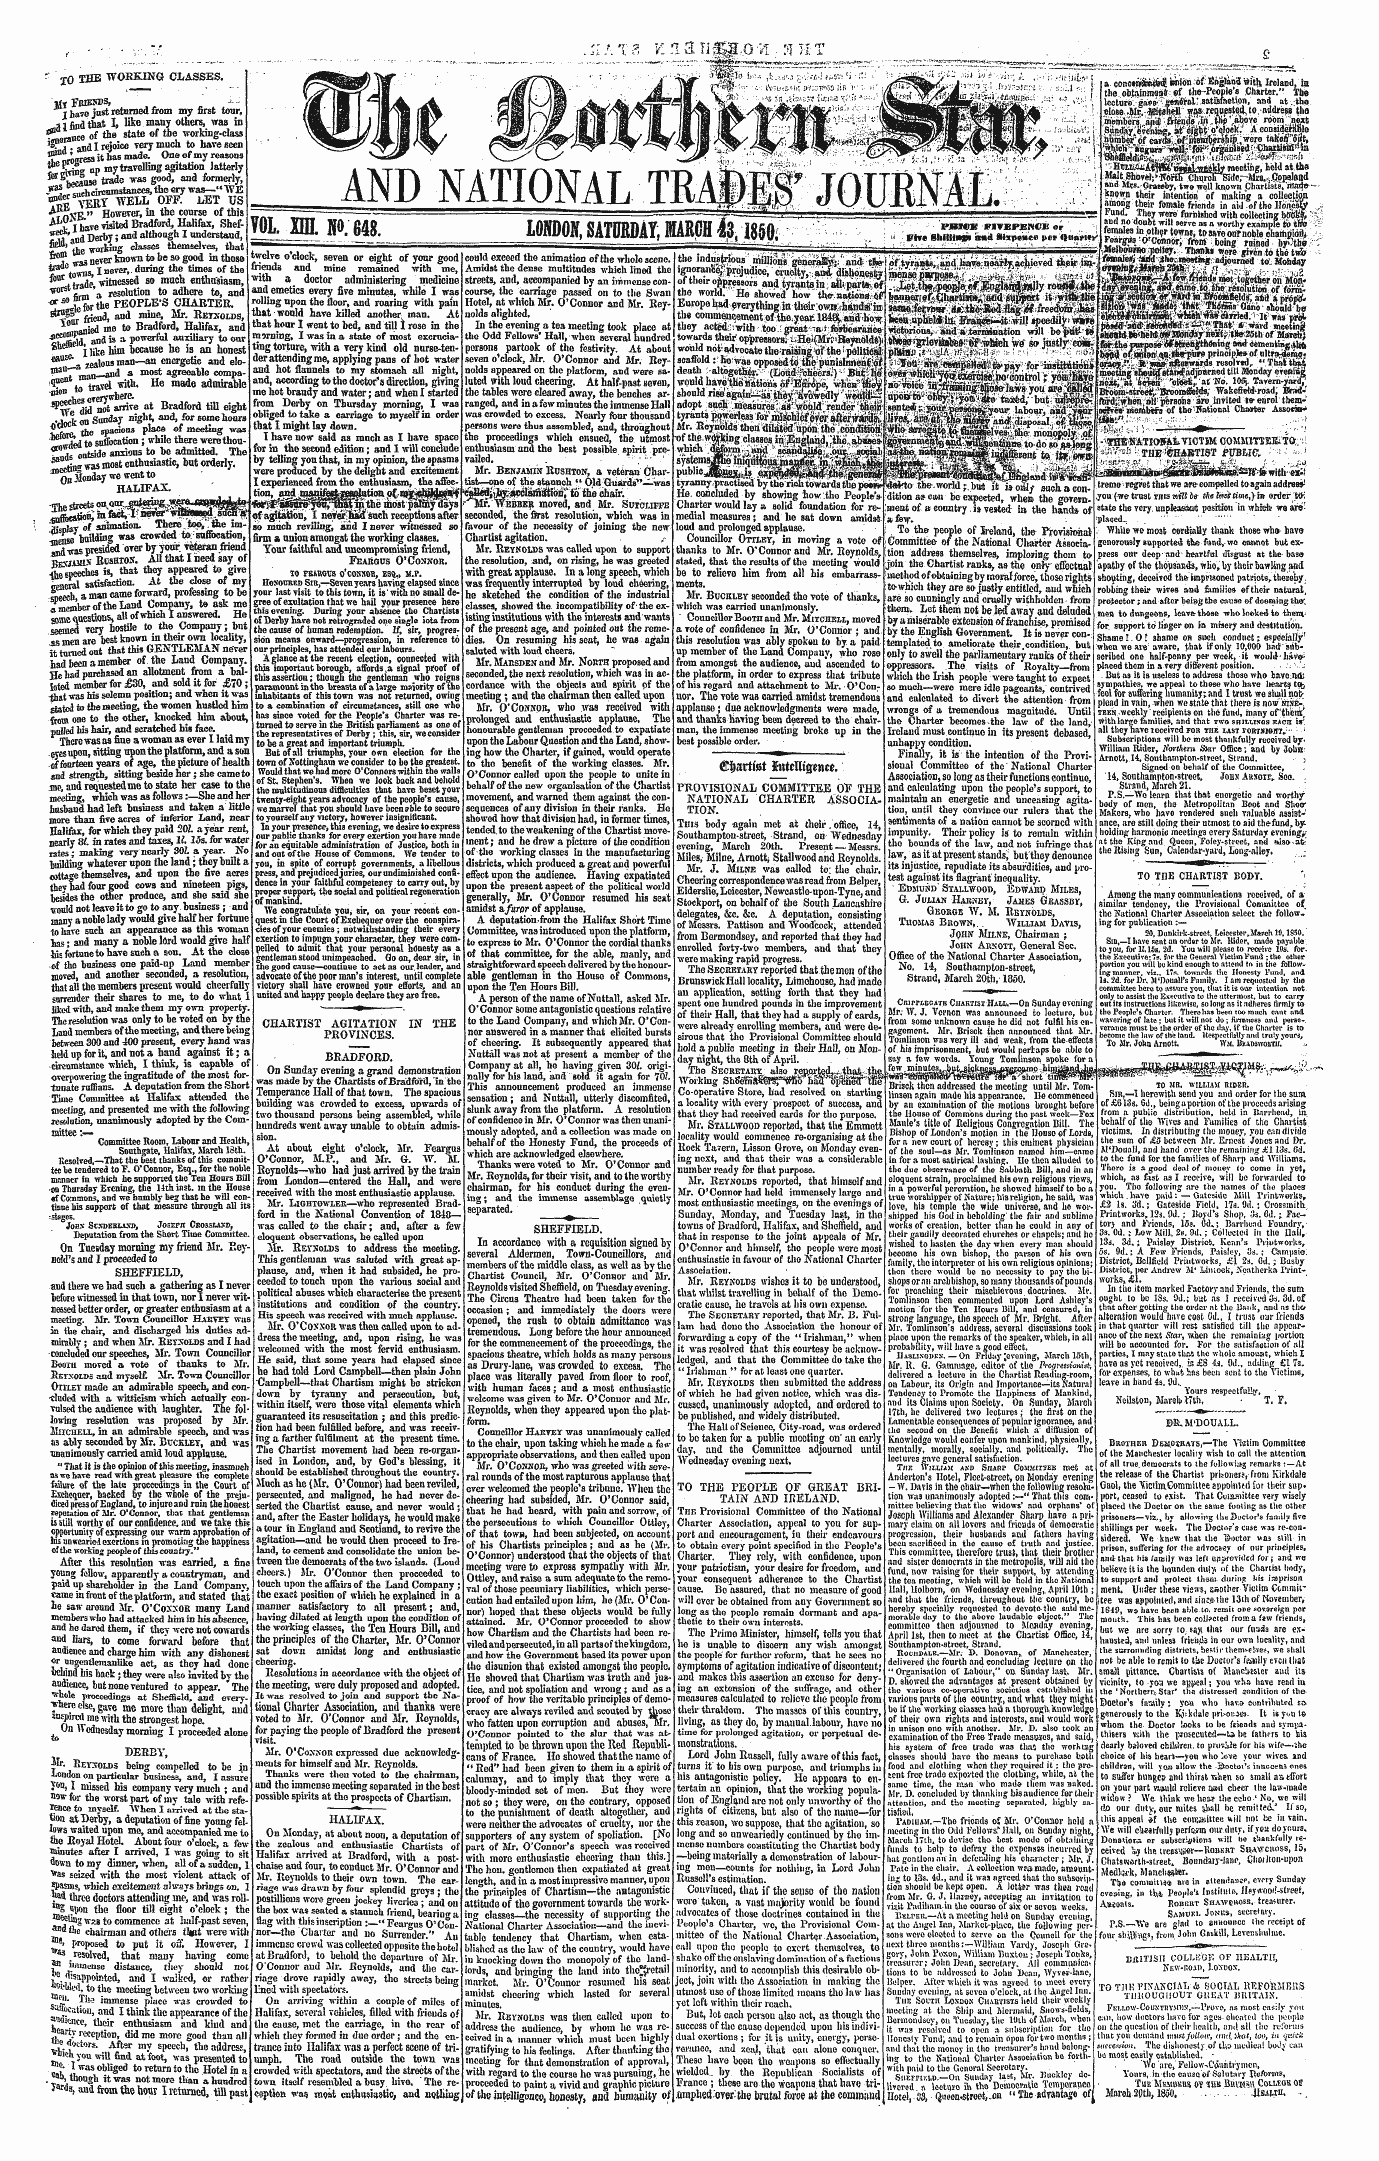 Northern Star (1837-1852): jS F Y, 3rd edition - Tim?- Uliajj-Tist -Victims-- .Y.X ' ^ >^...